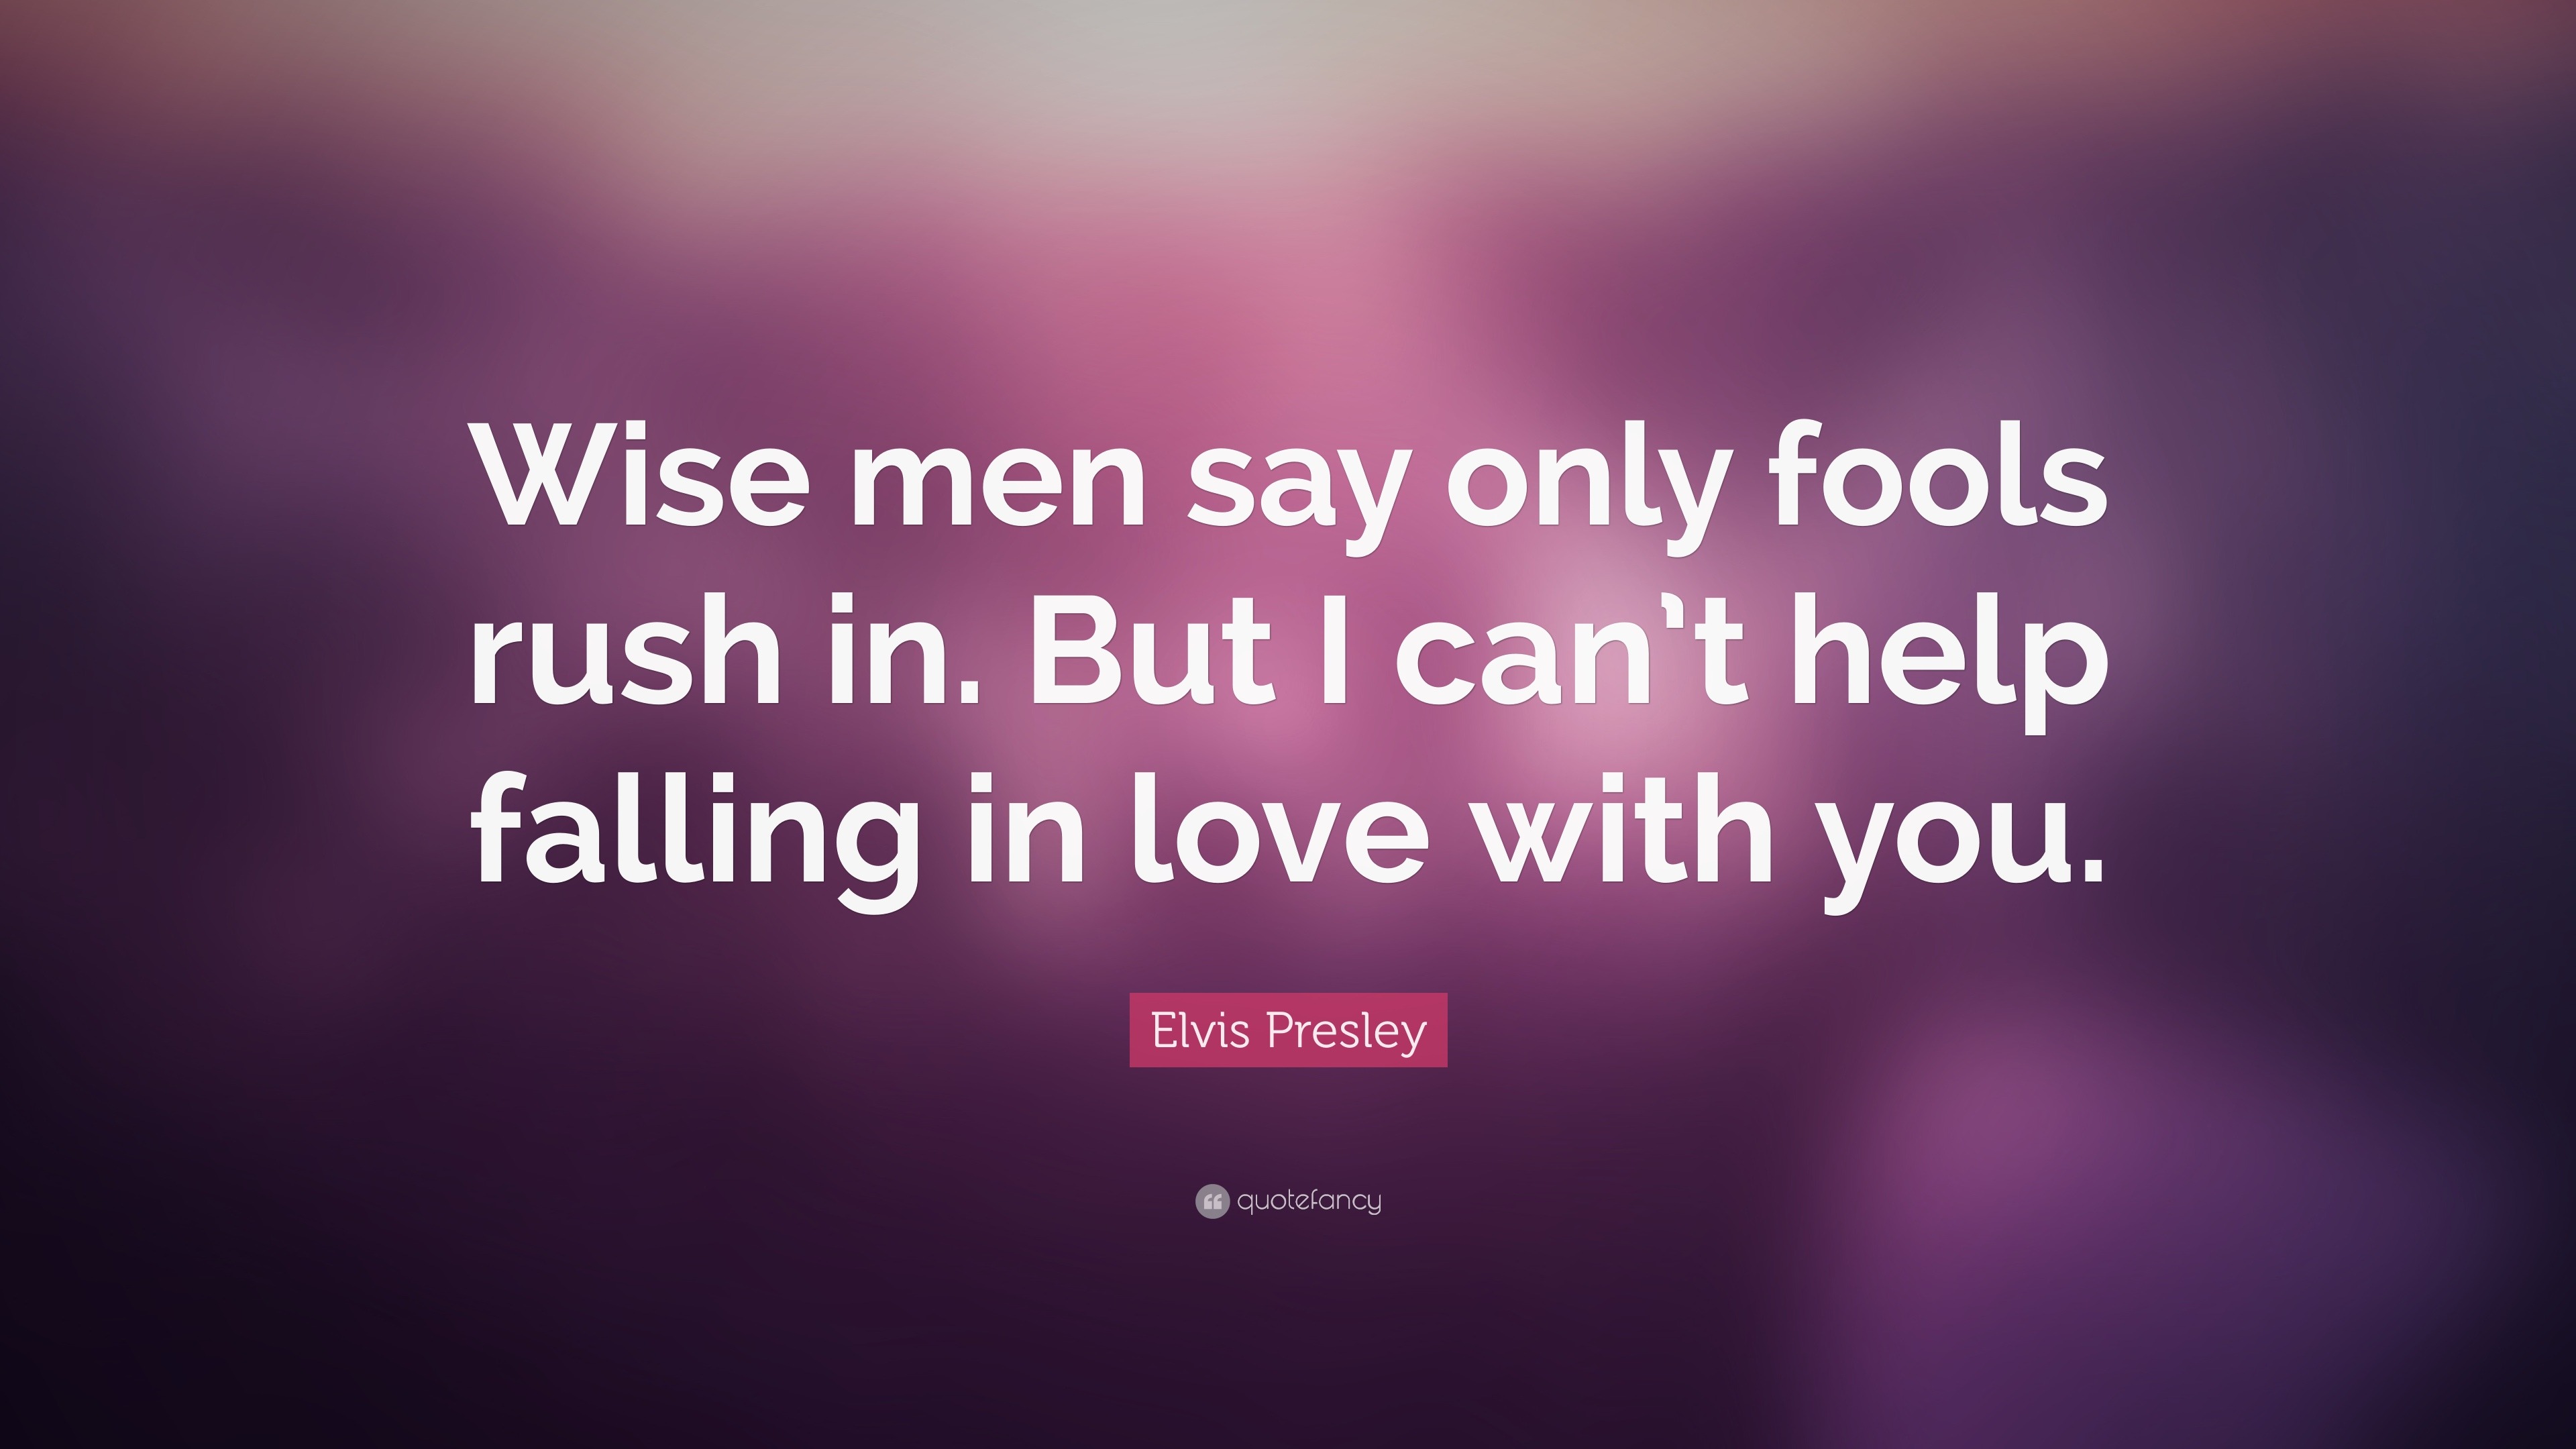 wise men say